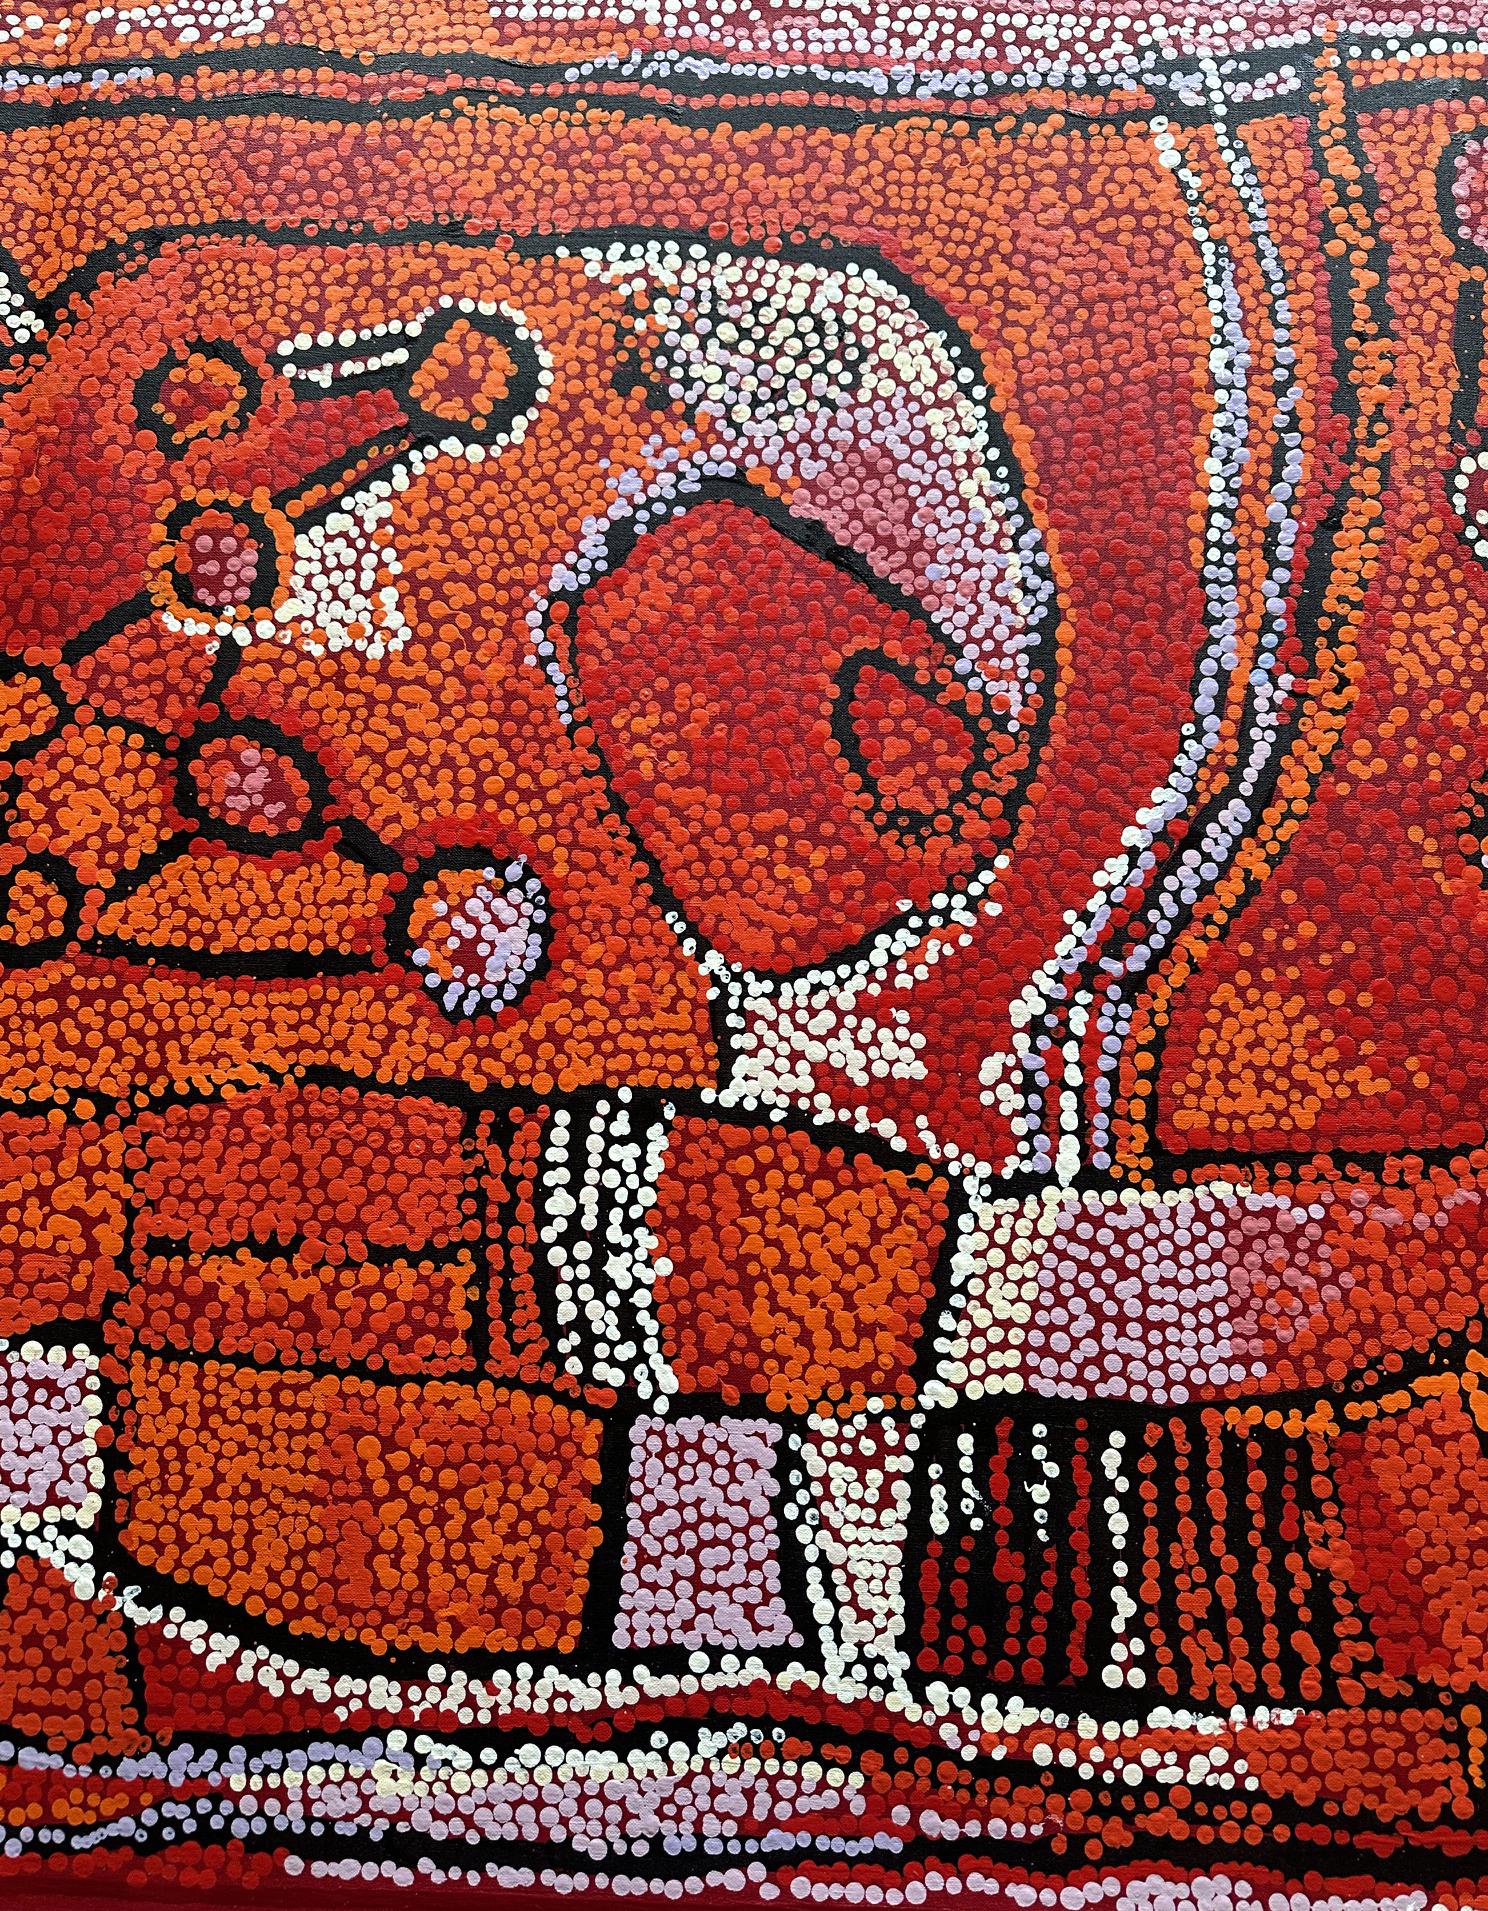 Modern Contemporary Australian Aboriginal Painting by Naata Nungurrayi